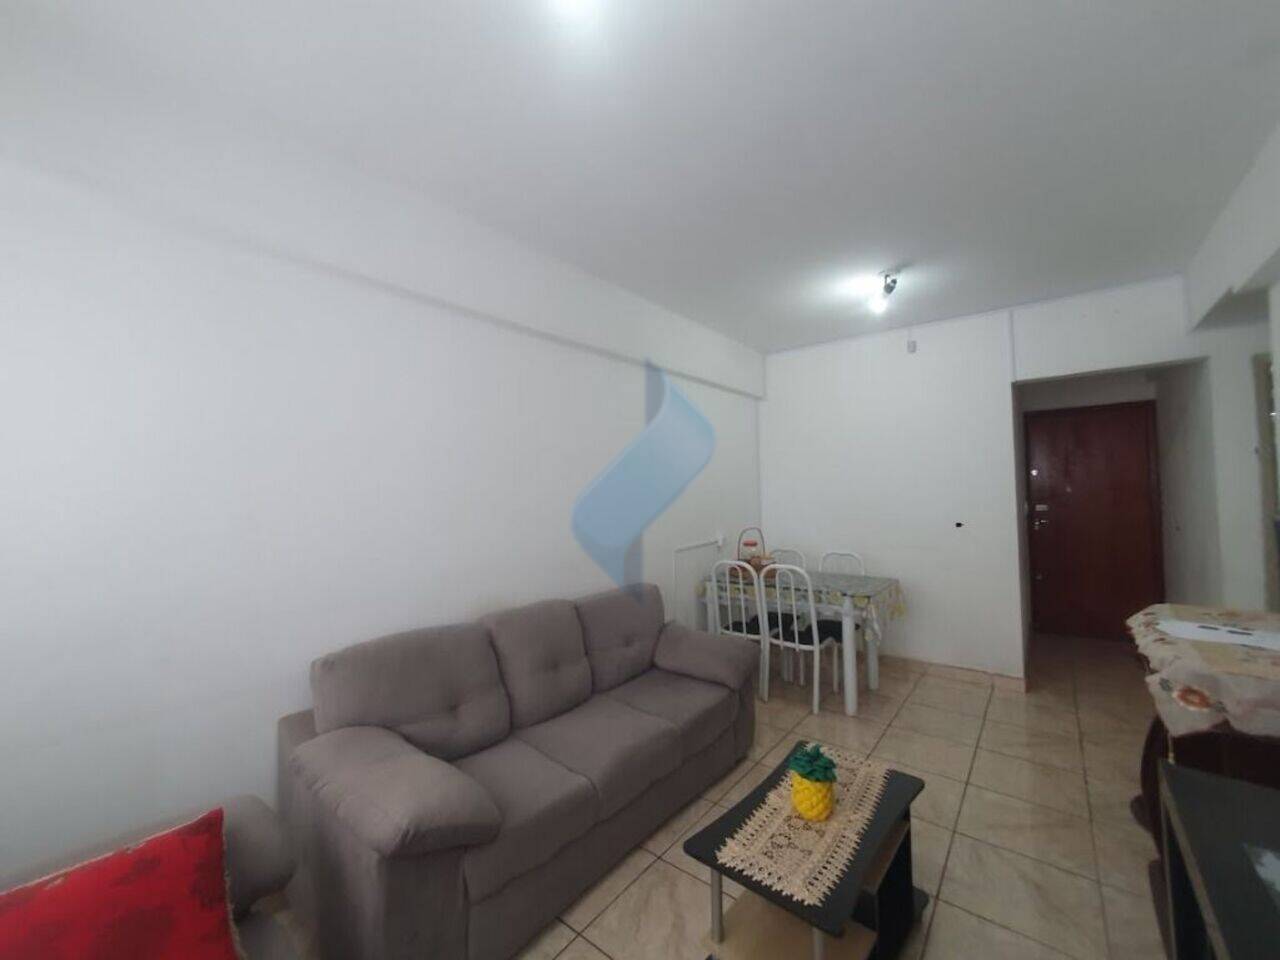 Apartamento Centro, Sorocaba - SP